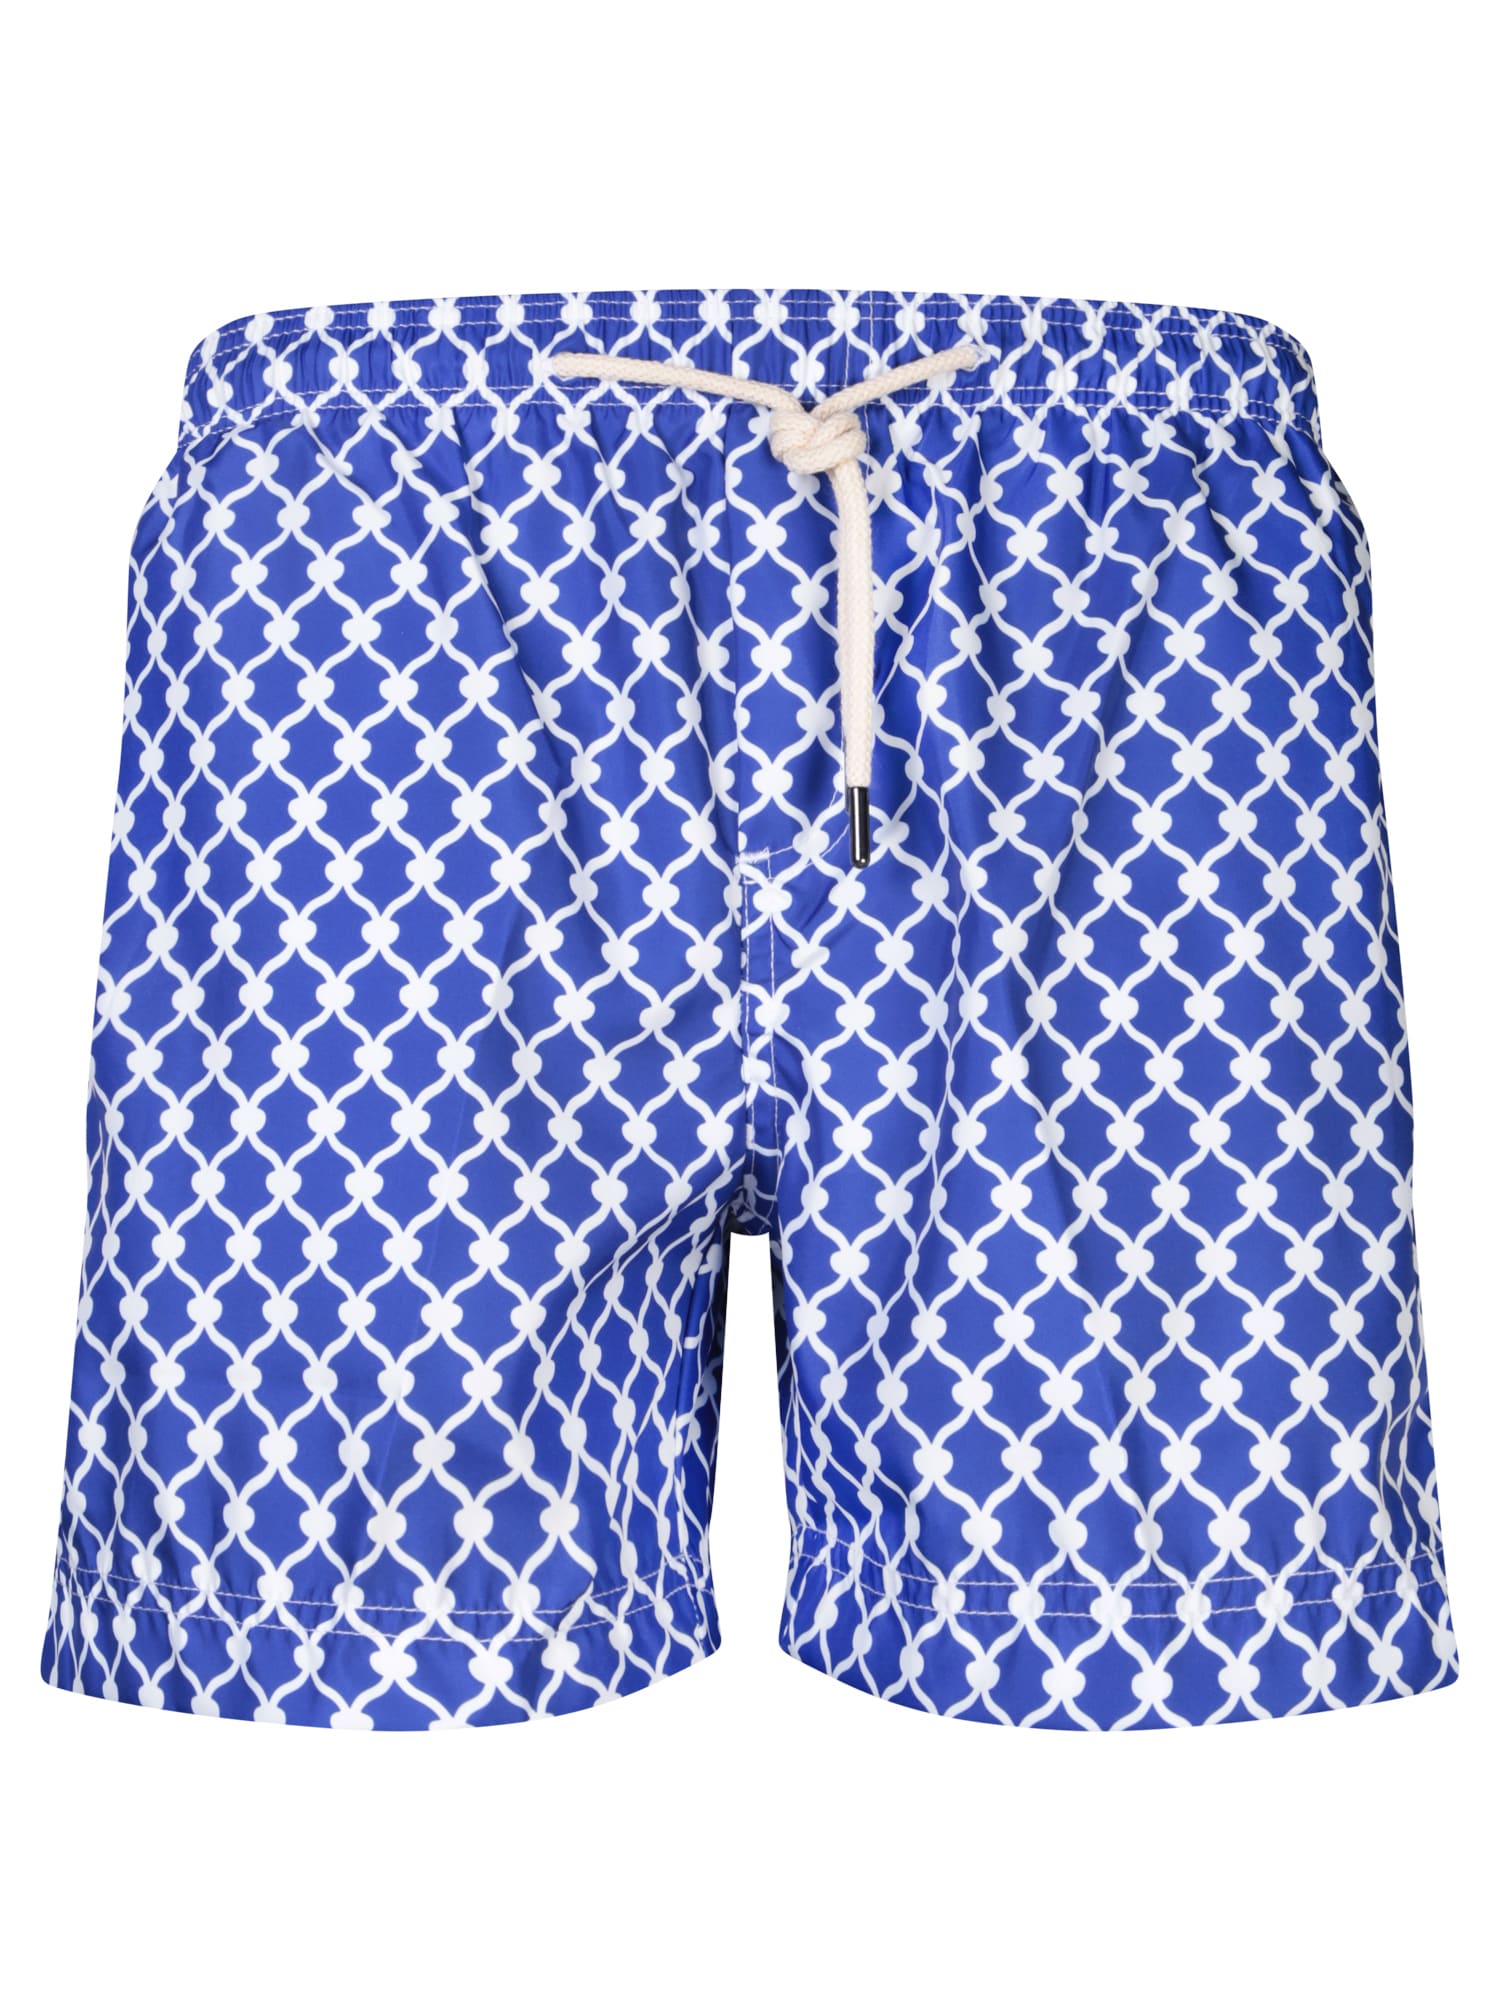 Patterned Blue/white Boxer Swim Shorts By Peninsula